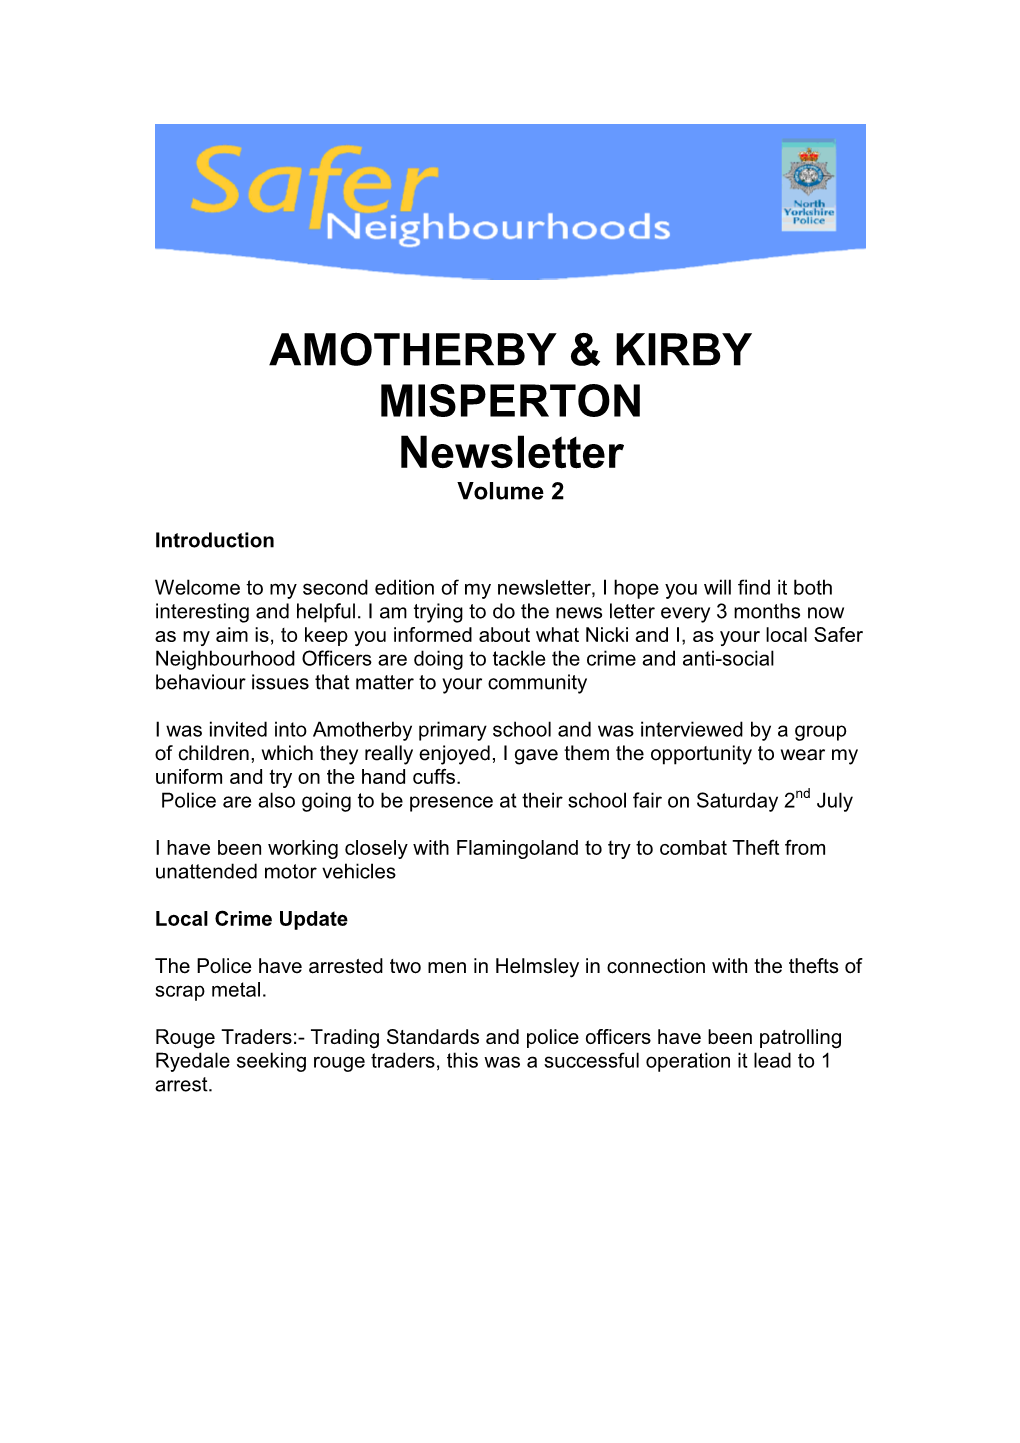 AMOTHERBY & KIRBY MISPERTON Newsletter